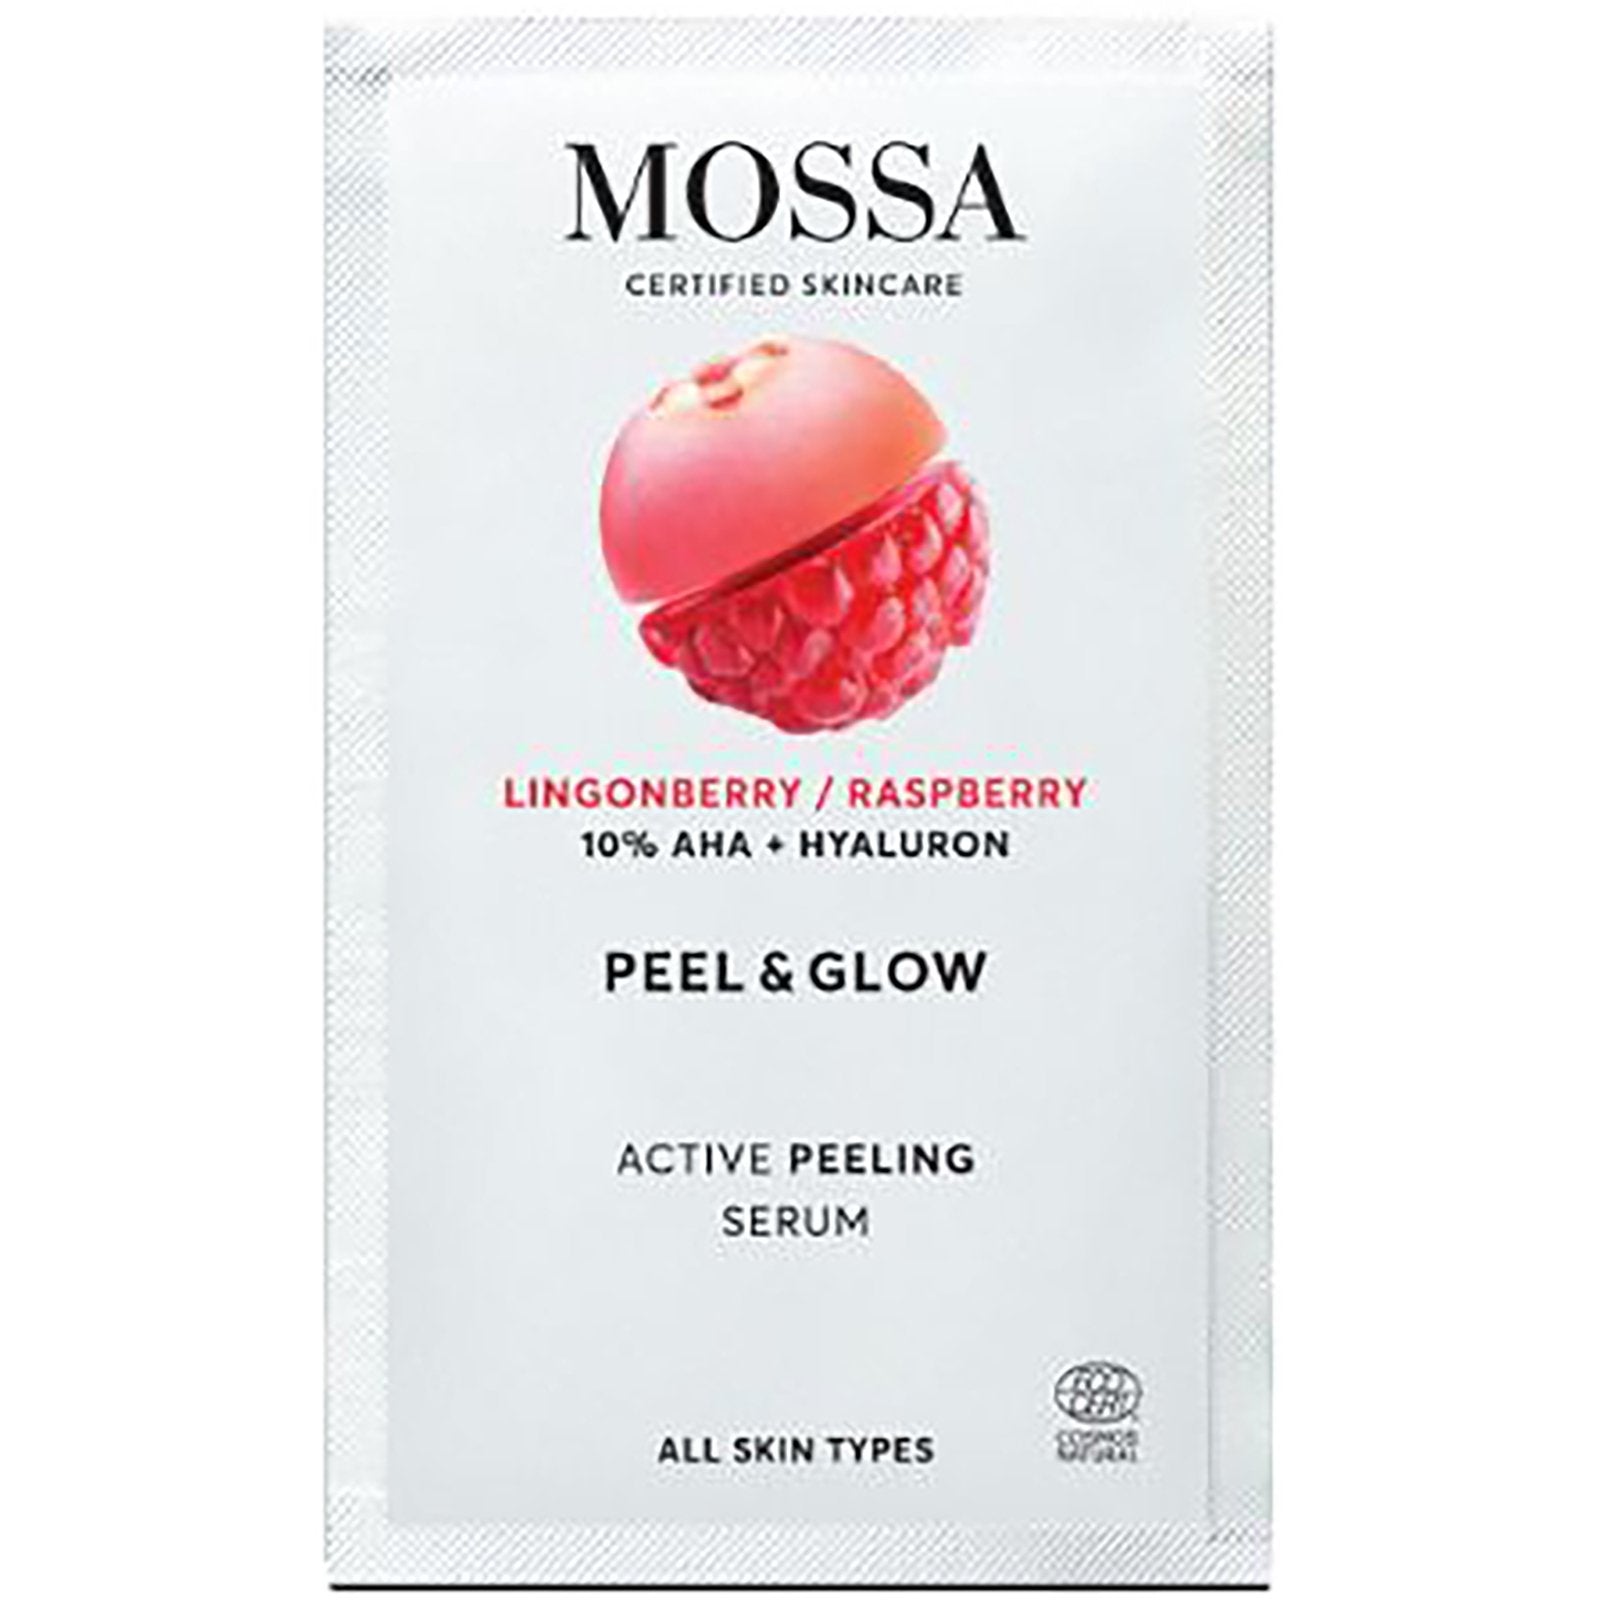 PEEL & GLOW Active Peeling Serum - mypure.co.uk